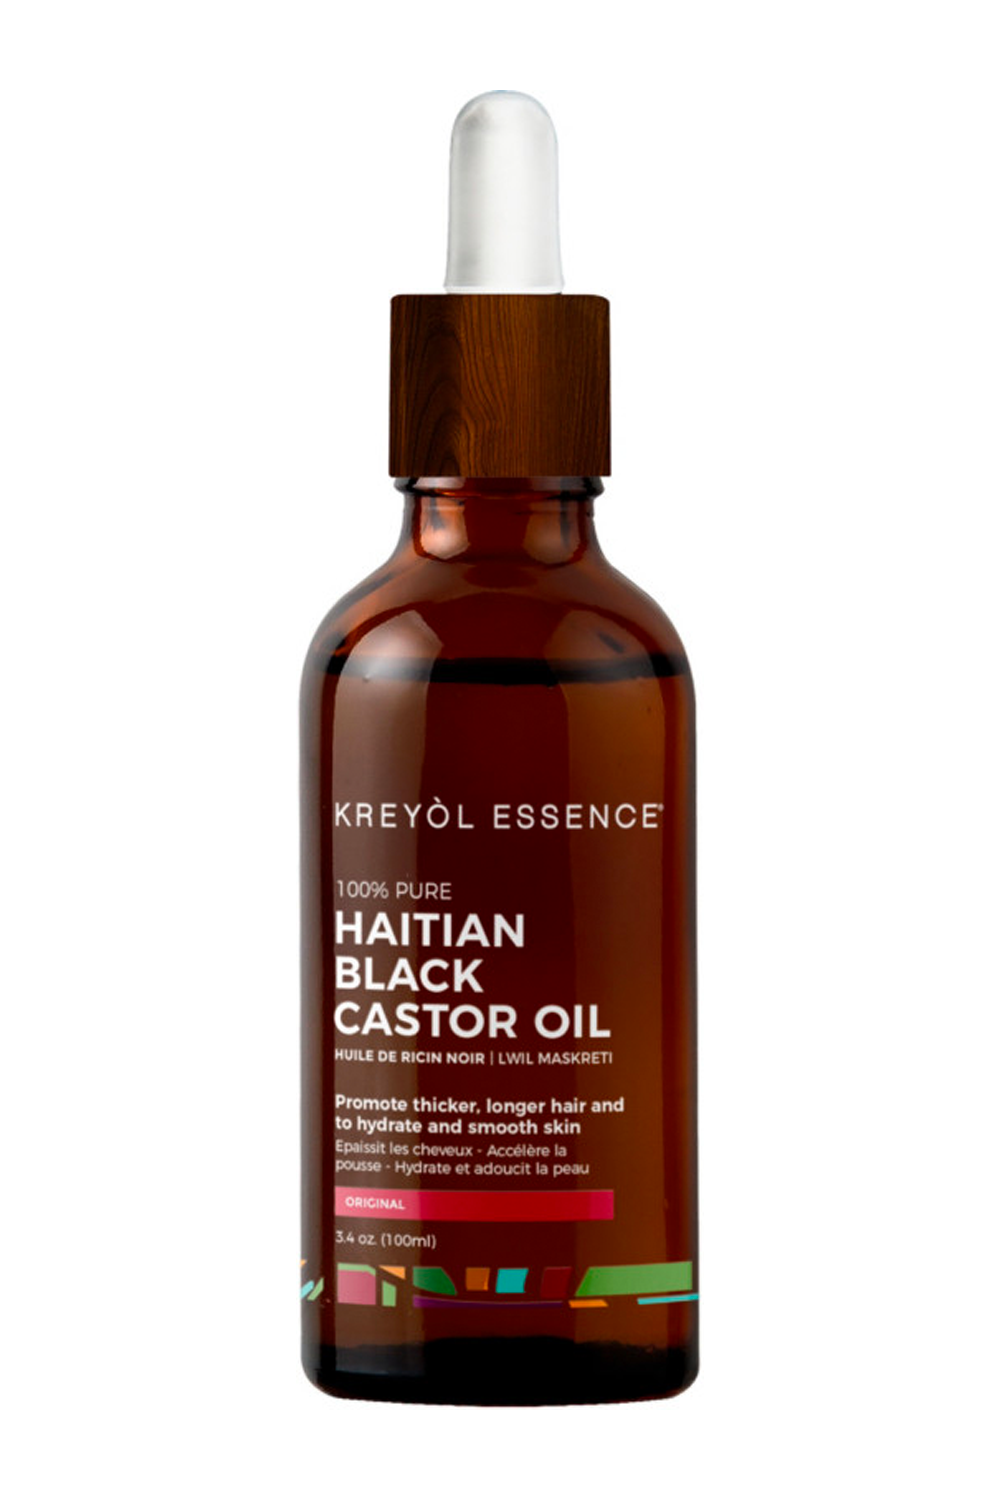 59 Top Photos Black Castor Oil Natural Hair / Black Castor Oil Benefits Castor Oil For Hair Growth Hair Growth Oil Natural Hair Styles